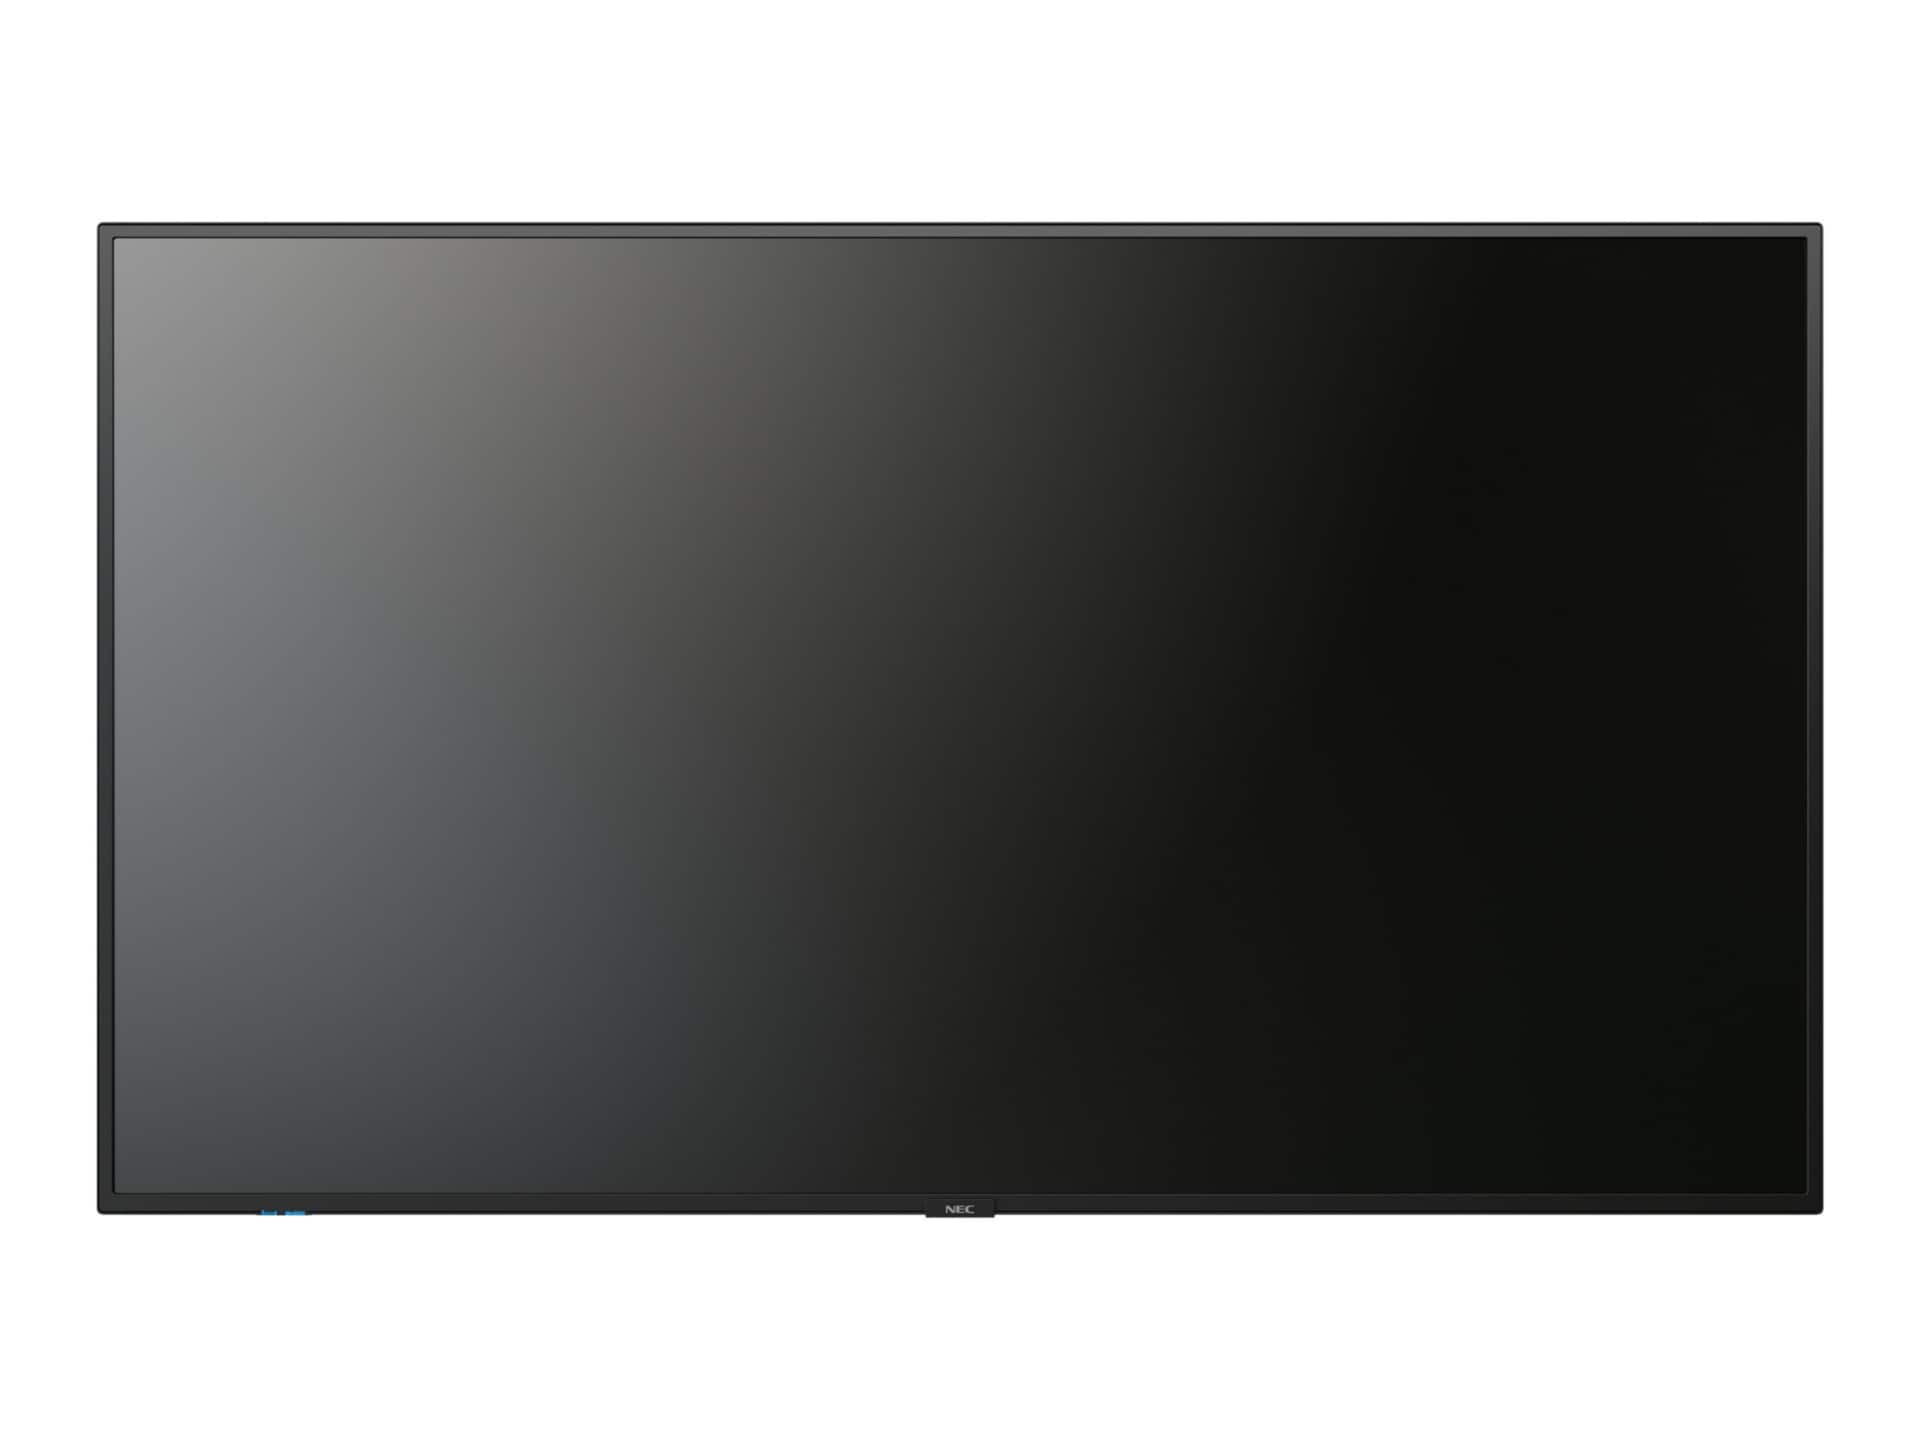 NEC MultiSync m551 M Series 55" LED-backlit LCD display - 4K - digital - M551 - Large Format Displays - CDW.com